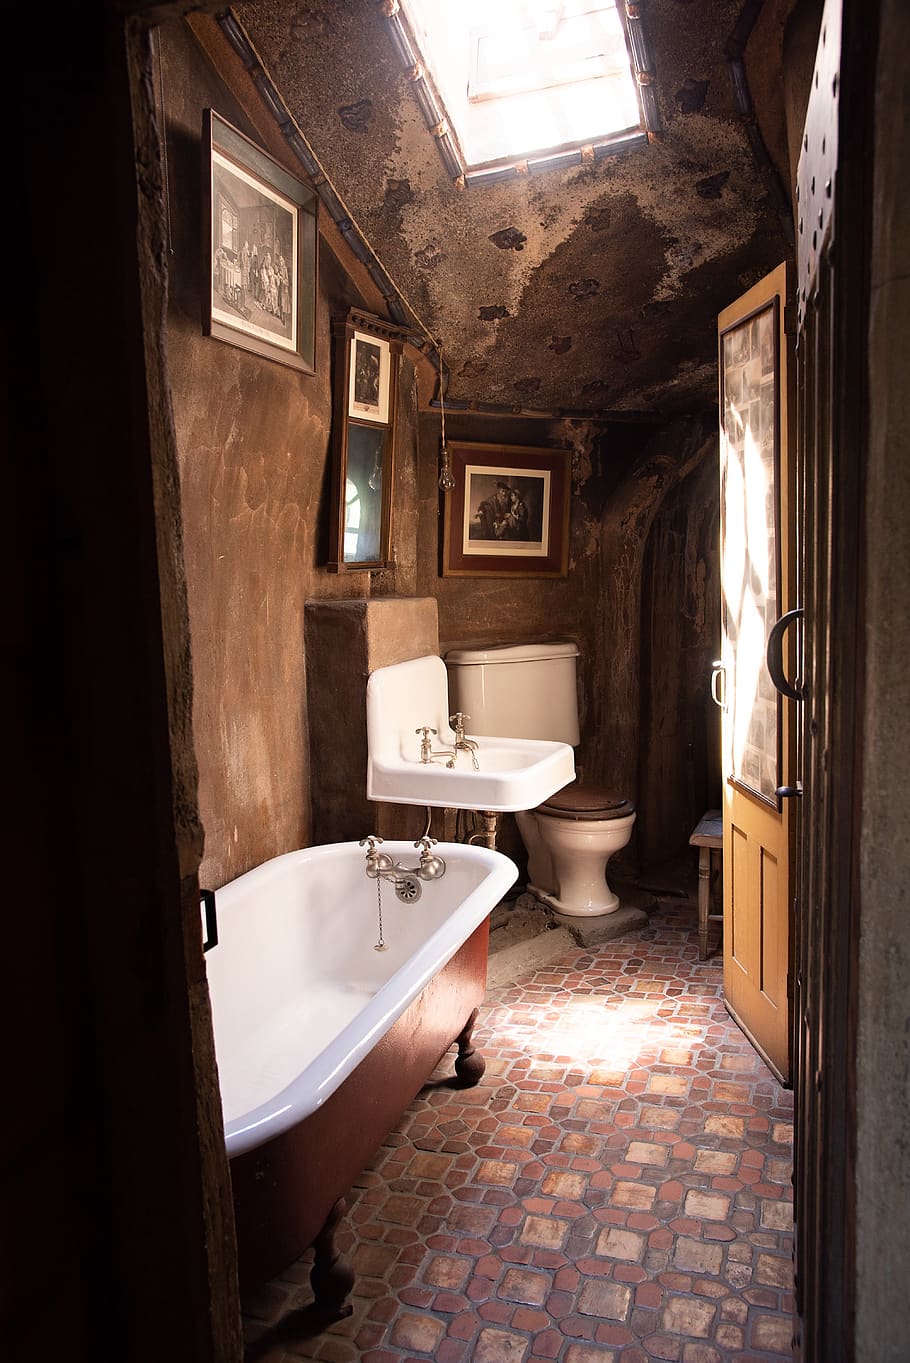 antique, bathroom, house, bath, sink, faucet, tap, toilet, old, rustic